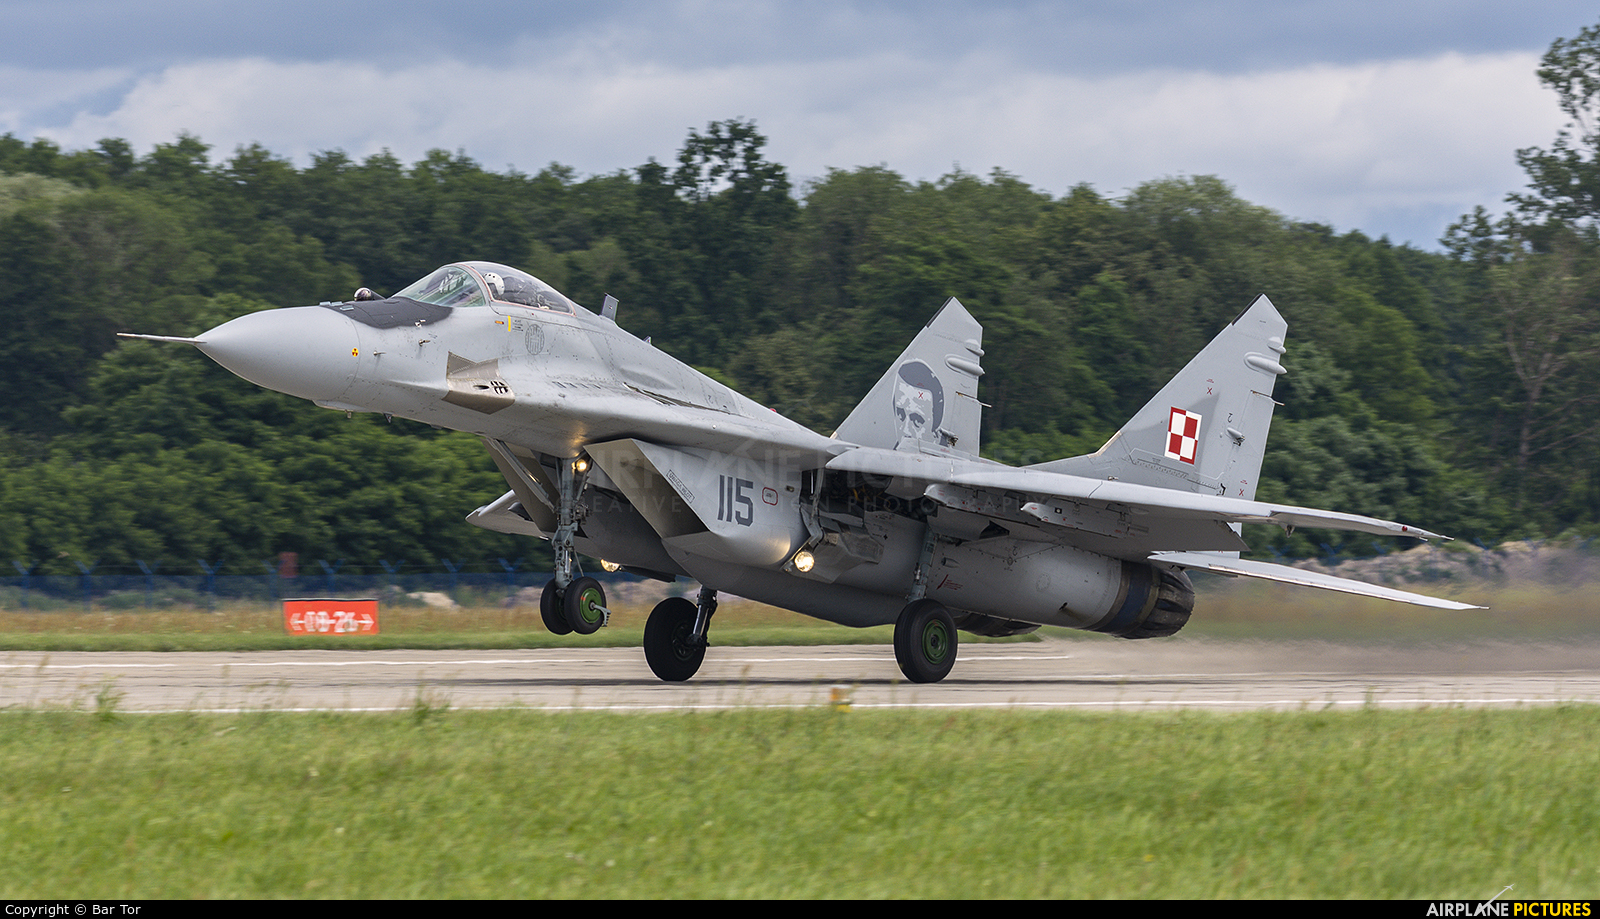 Poland - Air Force 115 aircraft at Mińsk Mazowiecki